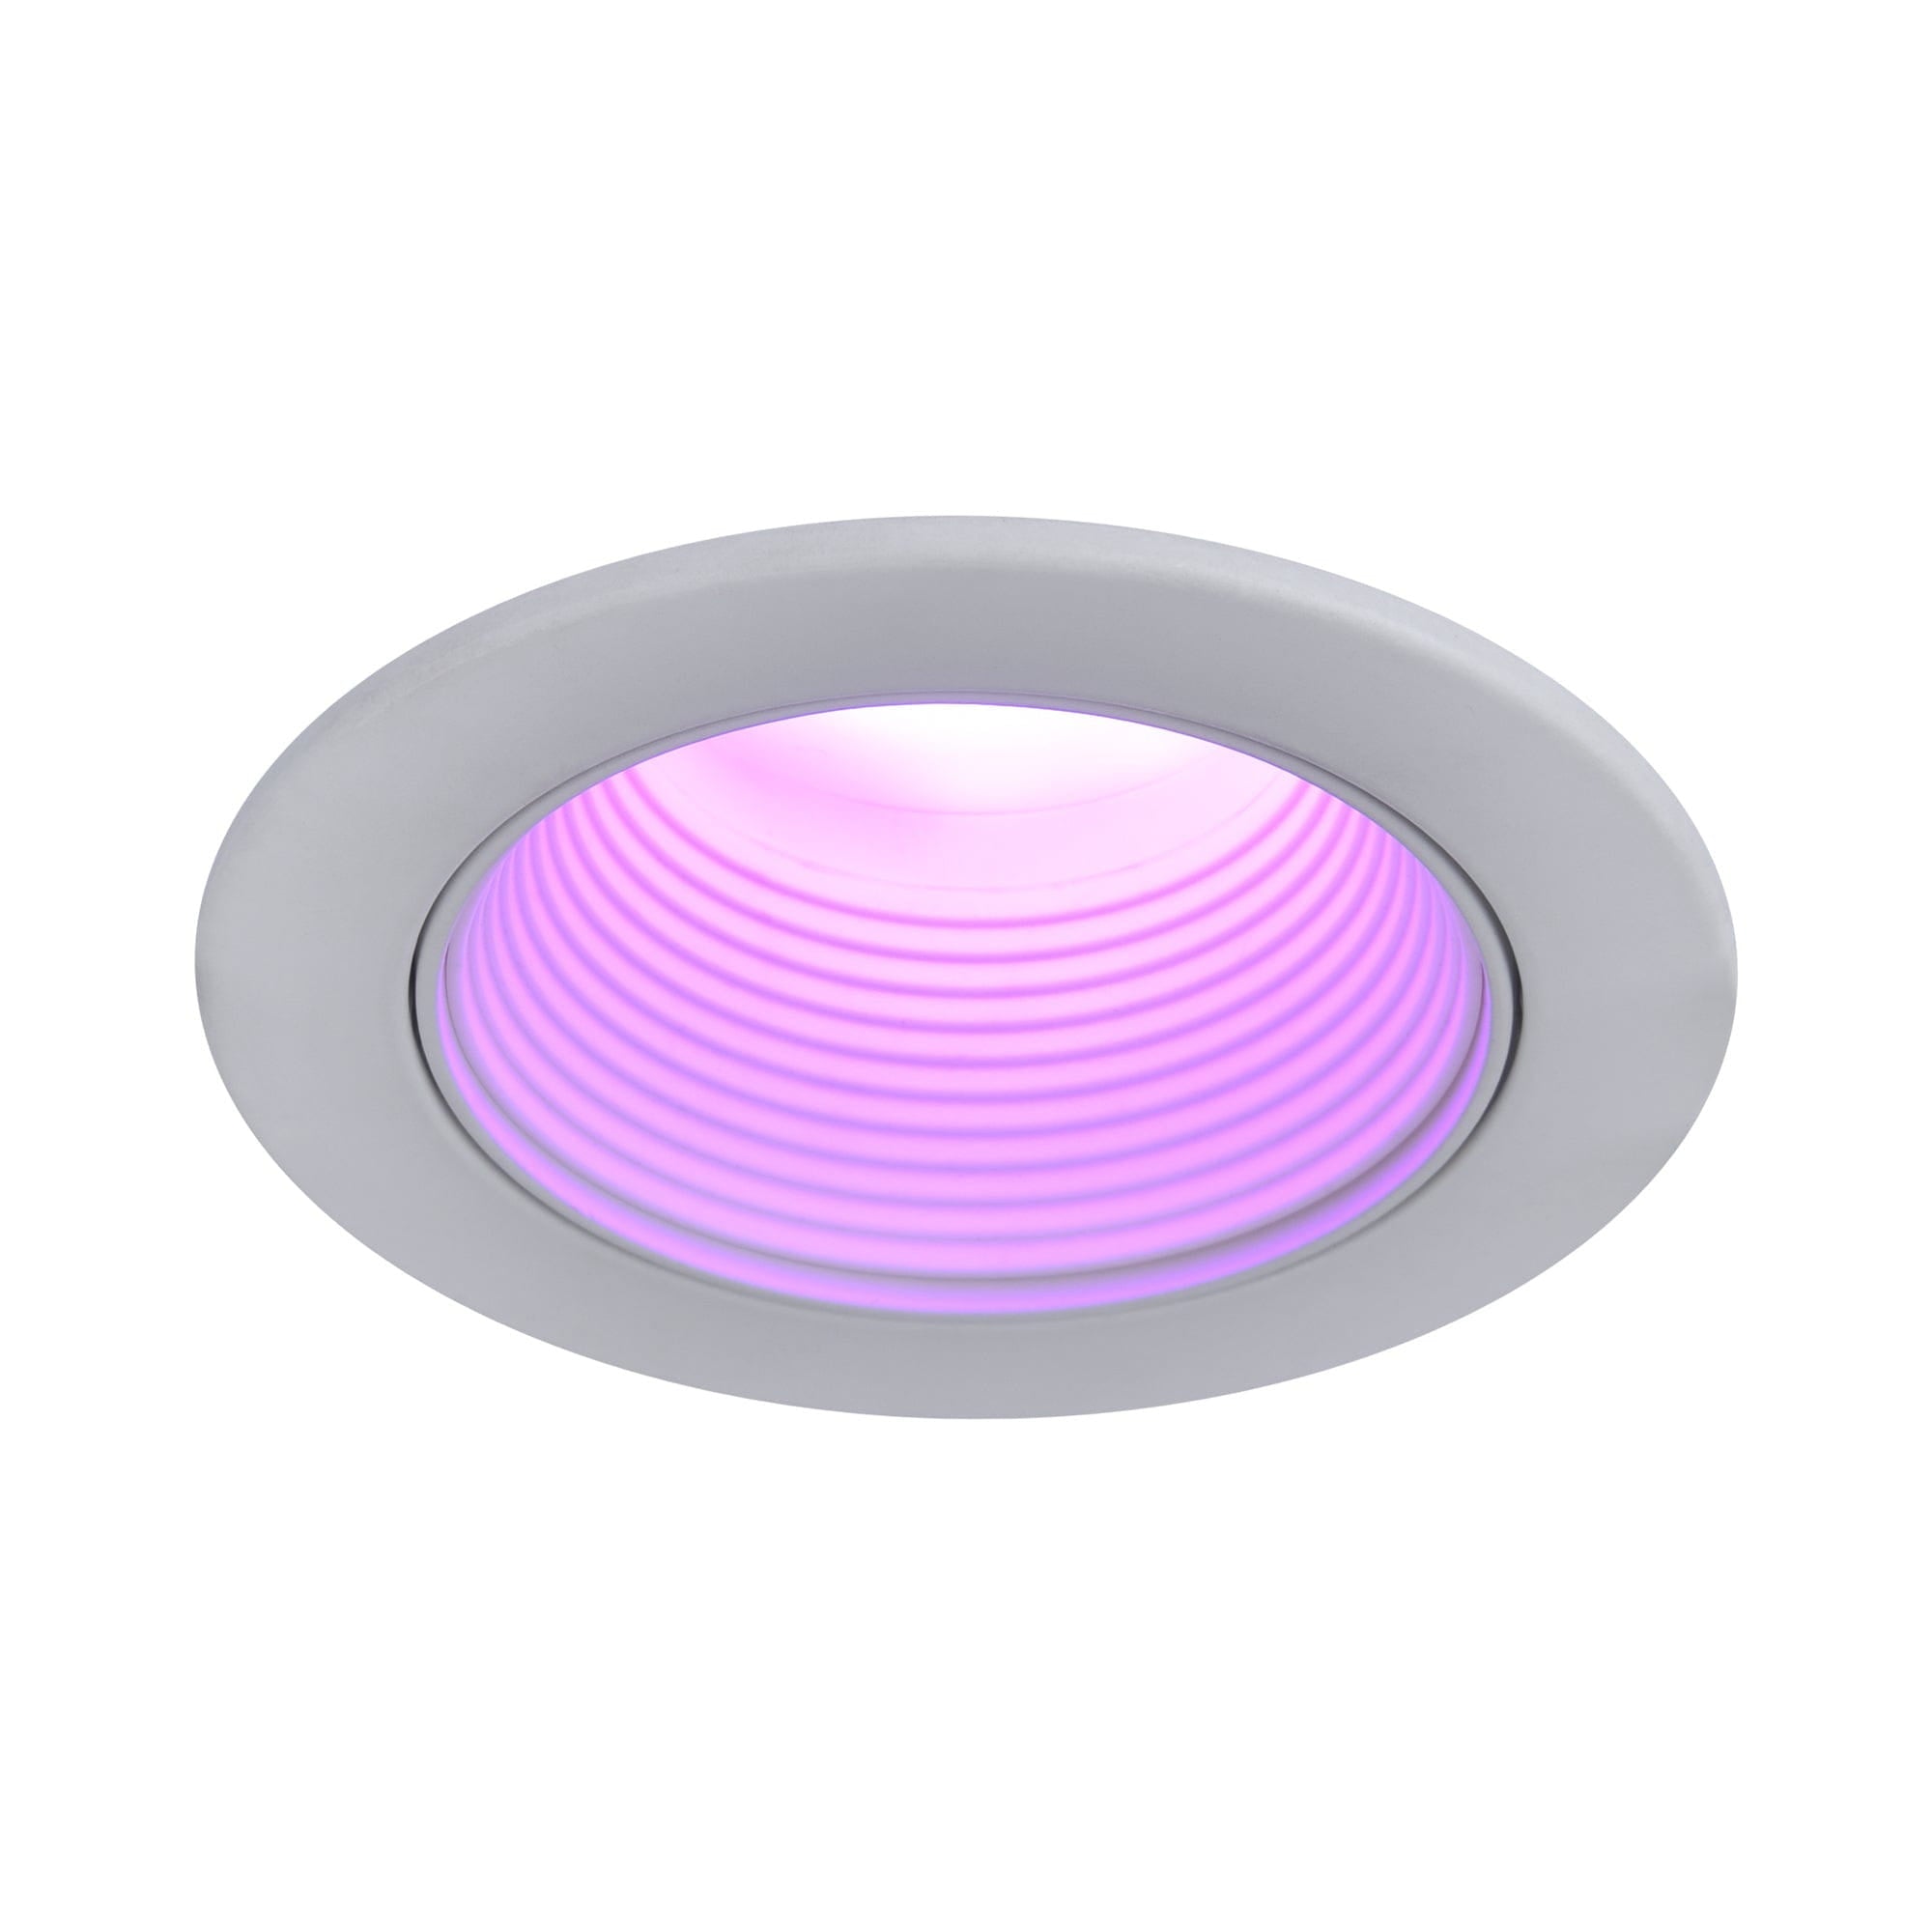 ALTUM - Qactus - LED rasvjeta